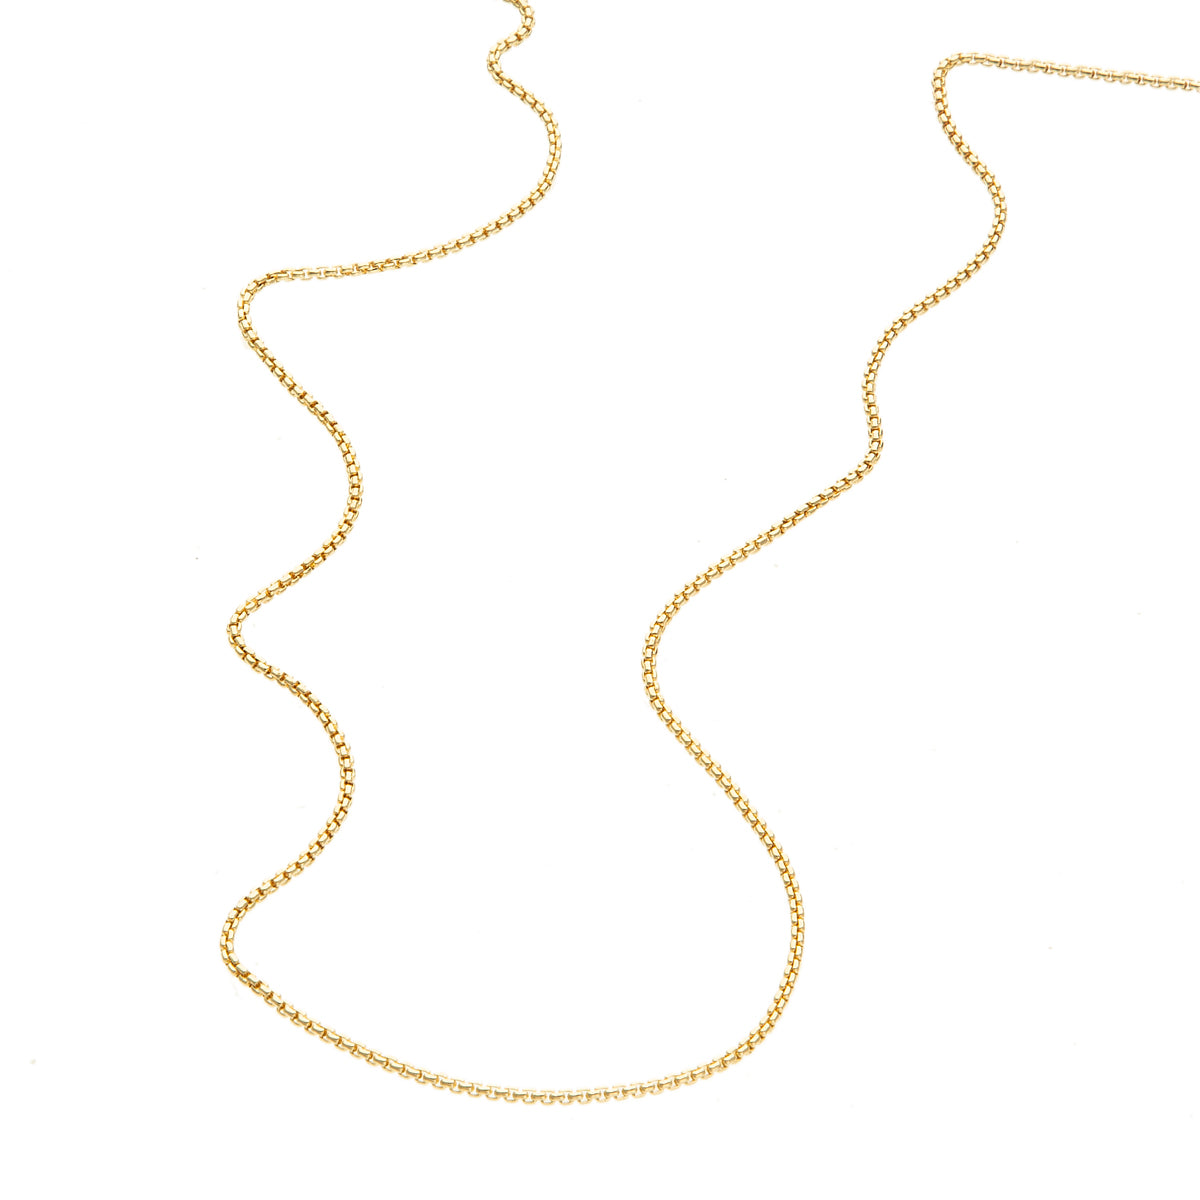 Gold Veneziana Chain Necklace